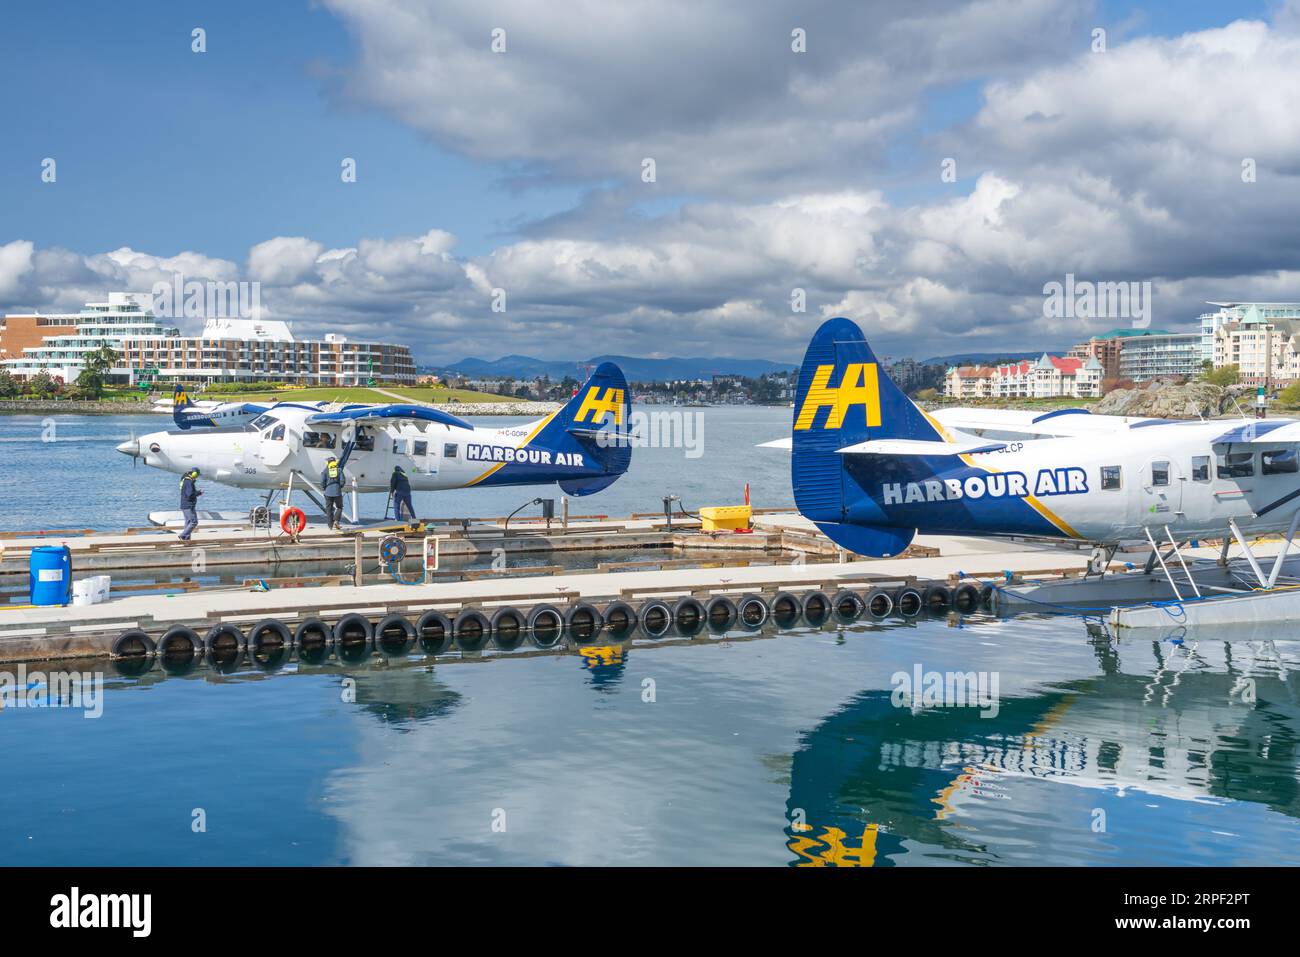 The Harbour Air seaplane base in Victoria, Vancouver Island, British Columbia, Canada. Stock Photo